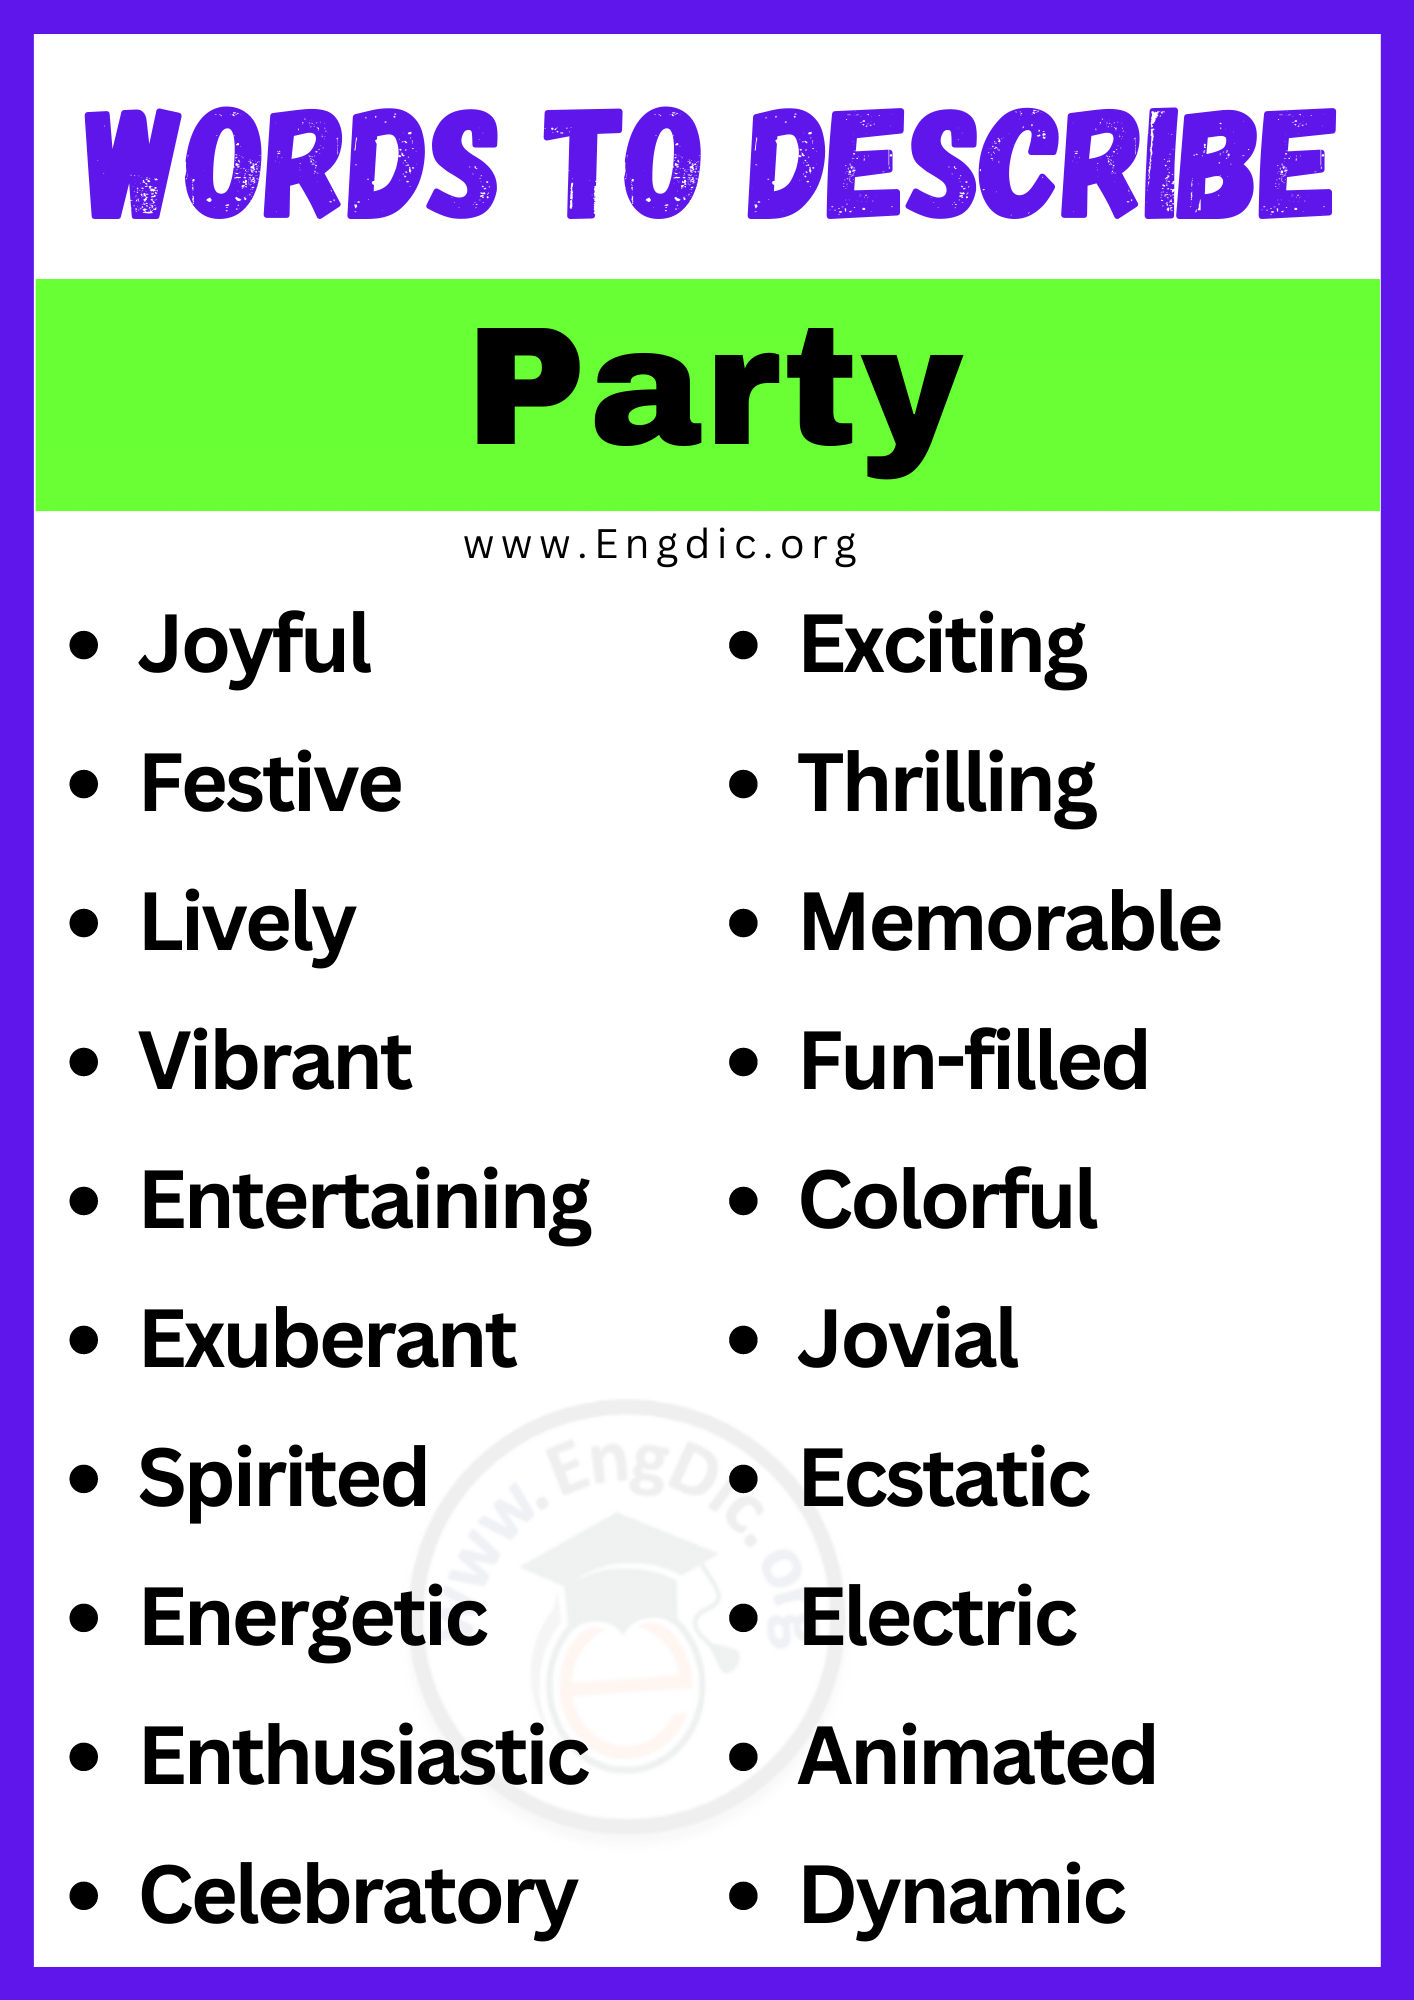 Words to Describe Party